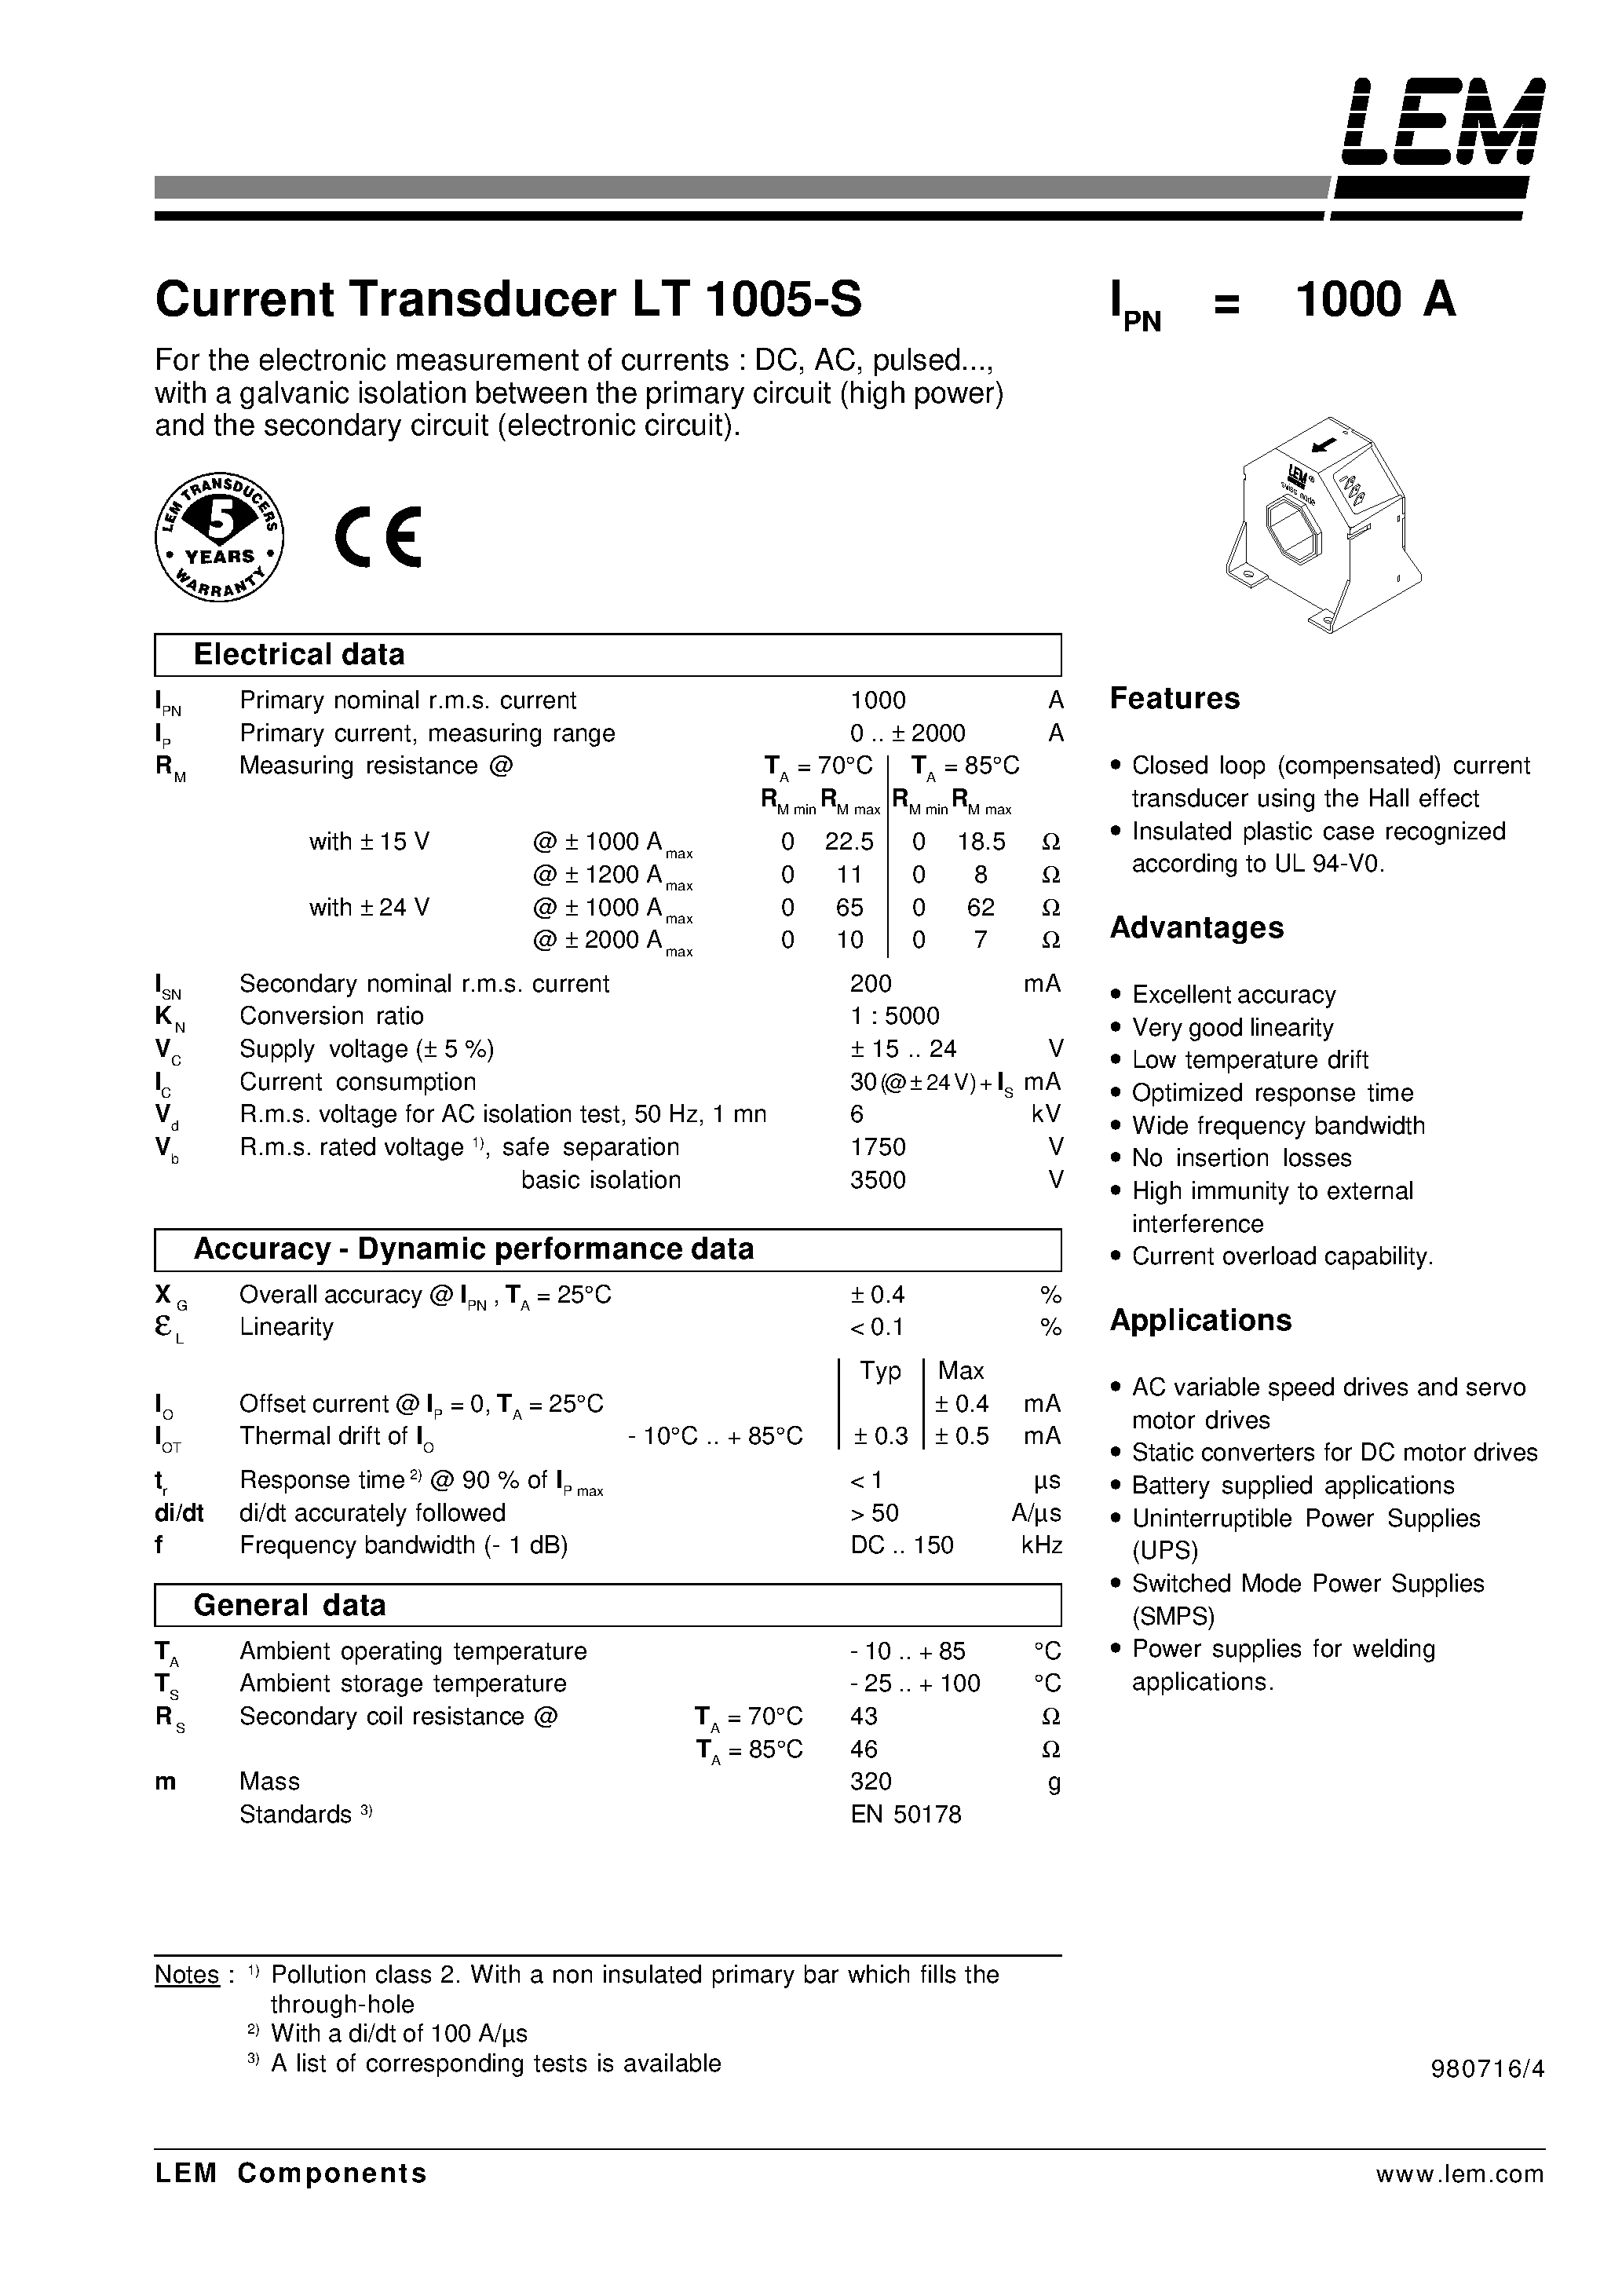 Datasheet LT1005-S - Current Transducer LT 1005-S page 1